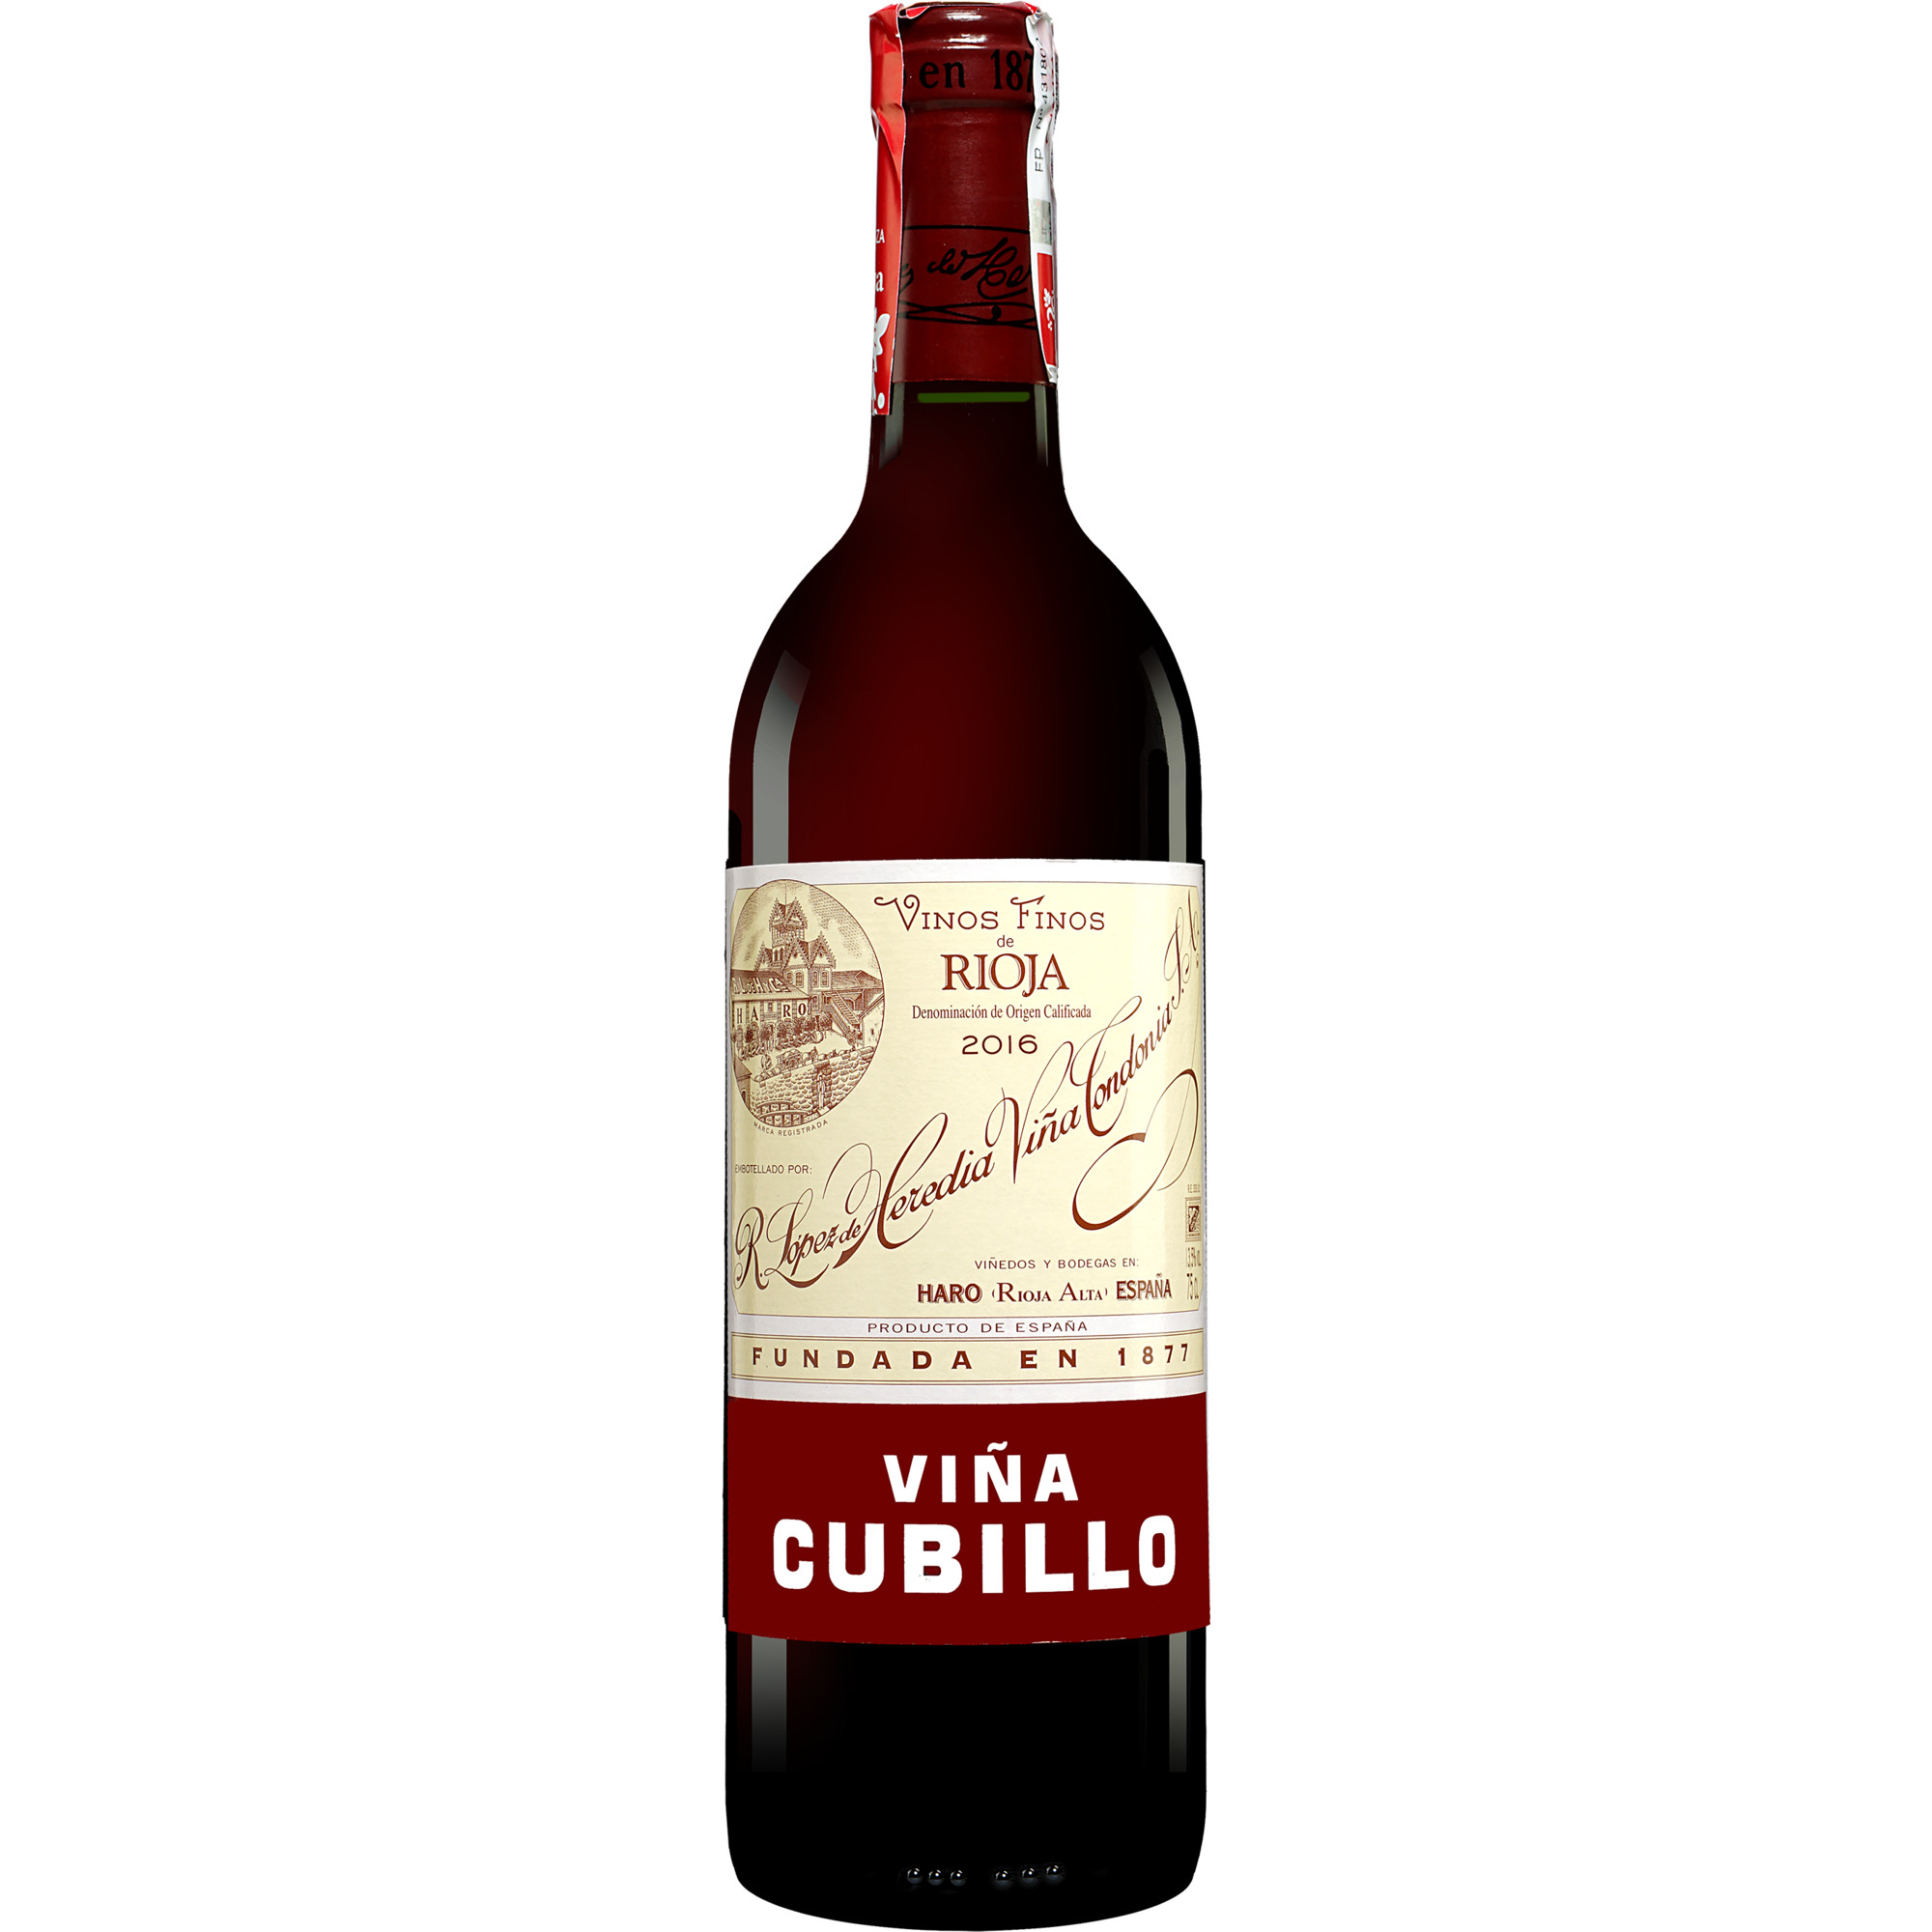 Tondonia »Viña Cubillo« Tinto Crianza 2016  013.5% Vol. Rotwein Trocken aus Spanien